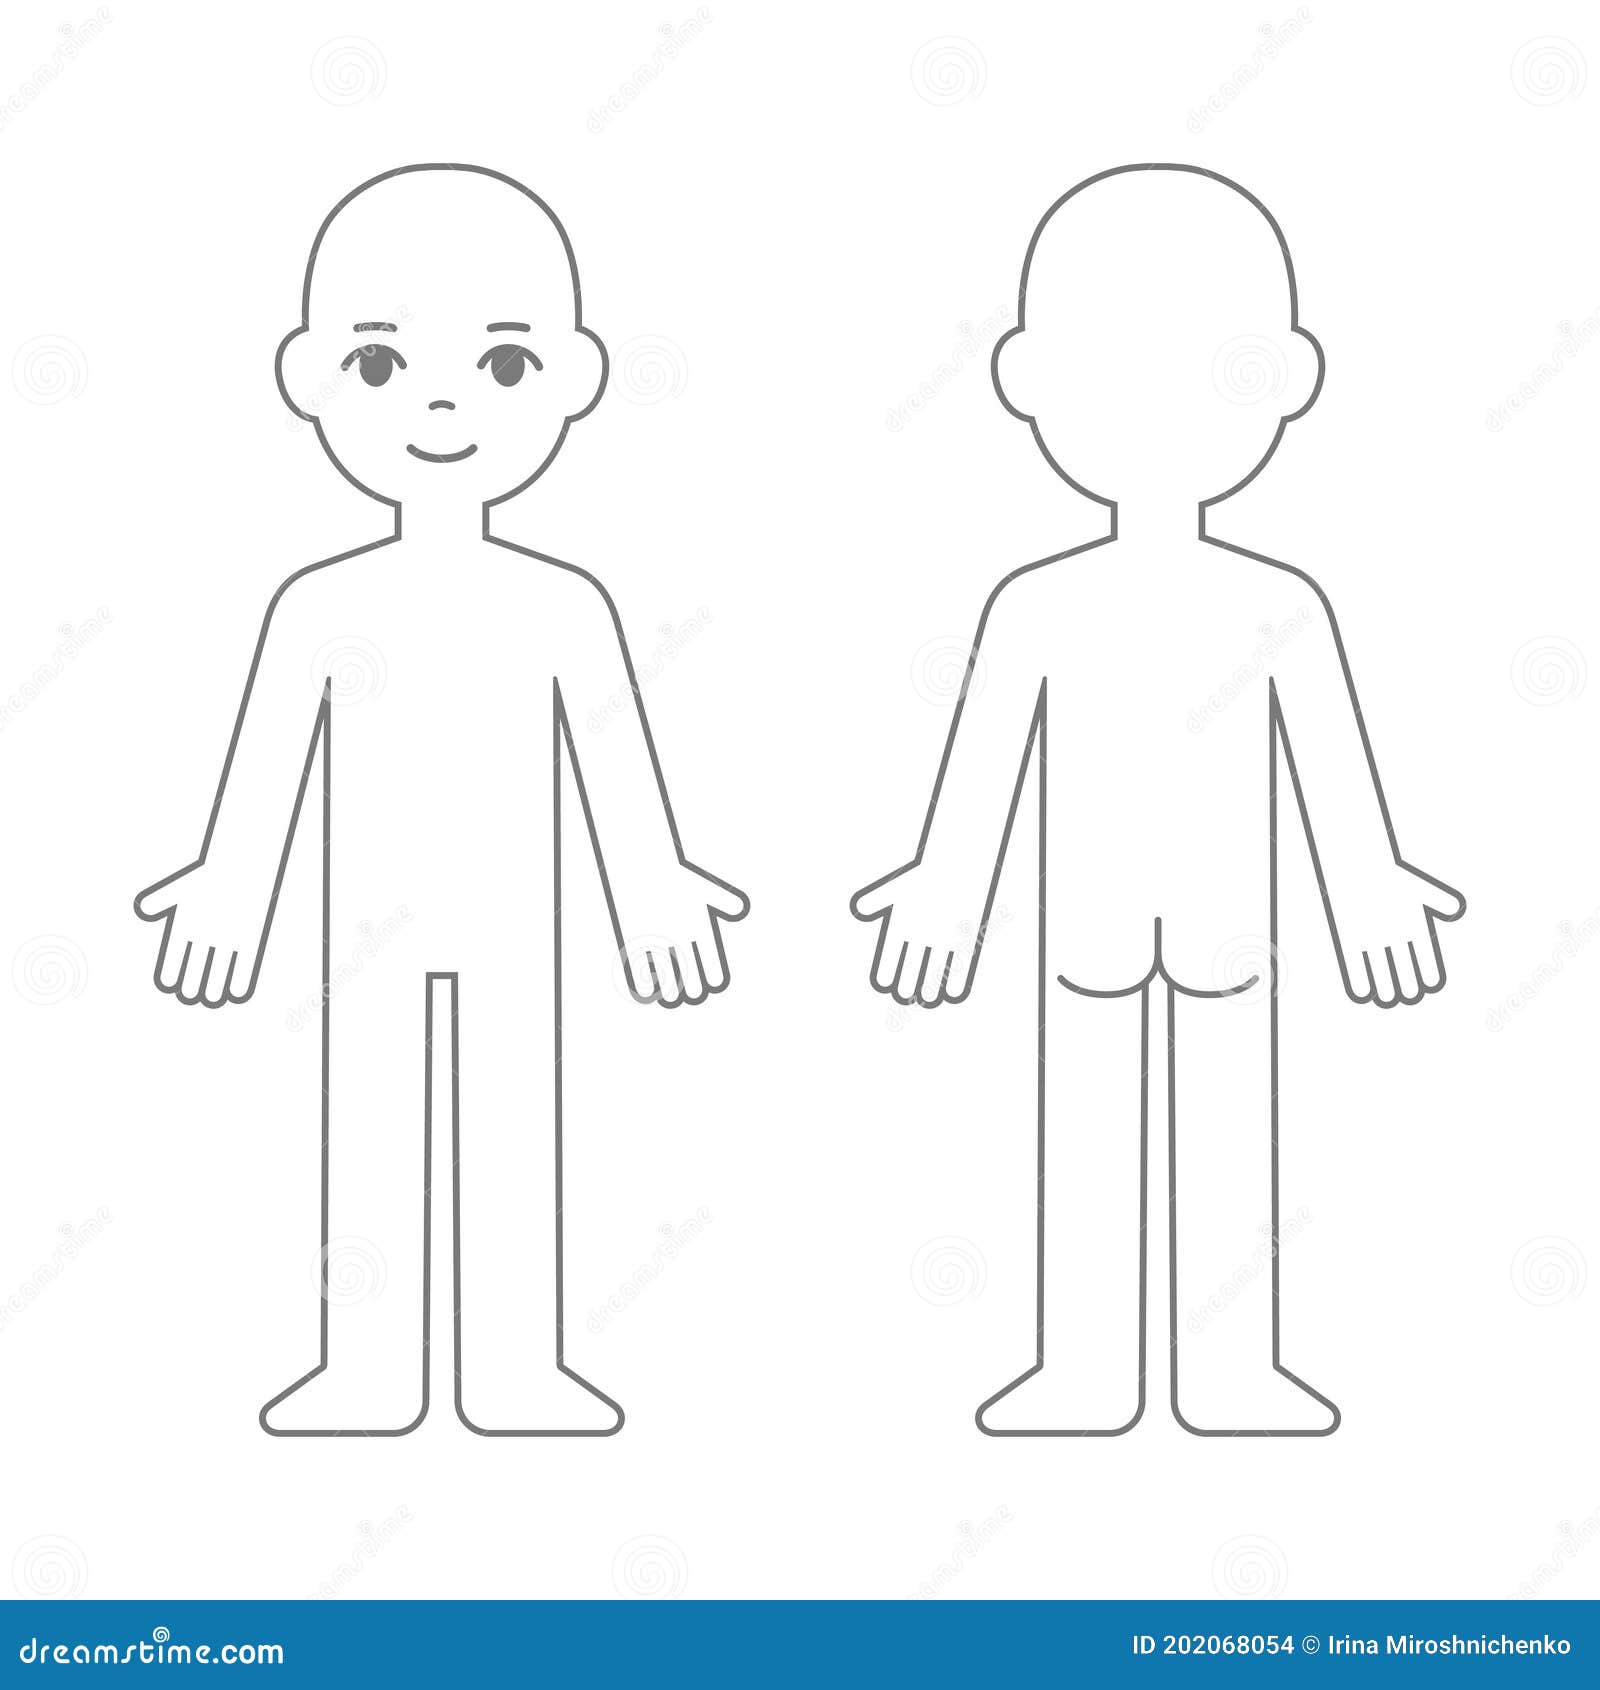 Child body template stock vector. Illustration of body - 202068054